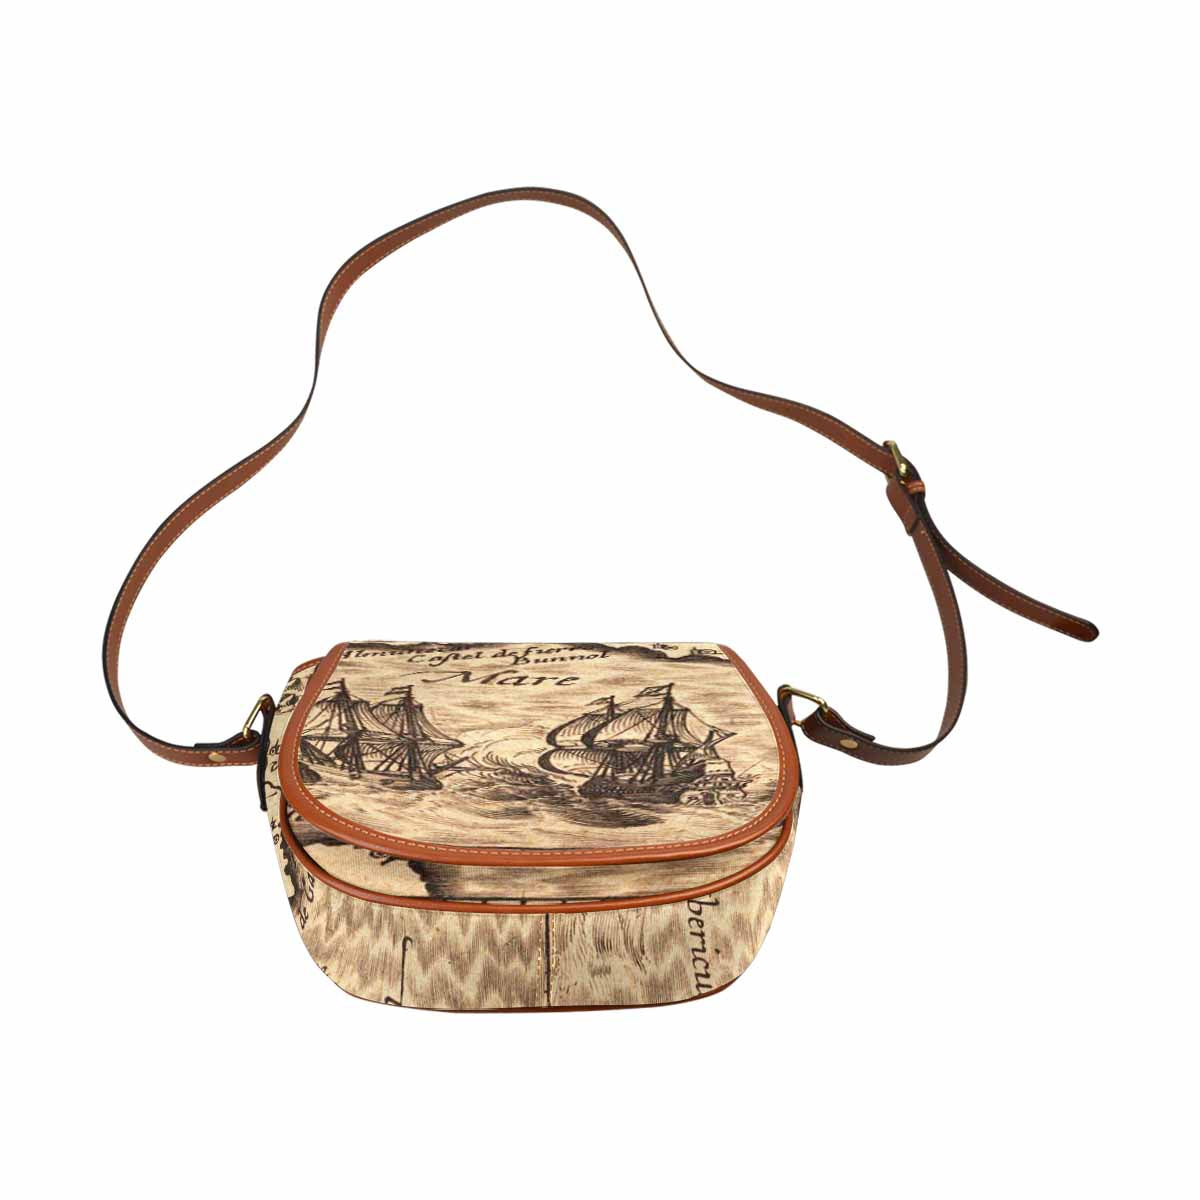 Antique Map design Handbag, saddle bag, Design 25